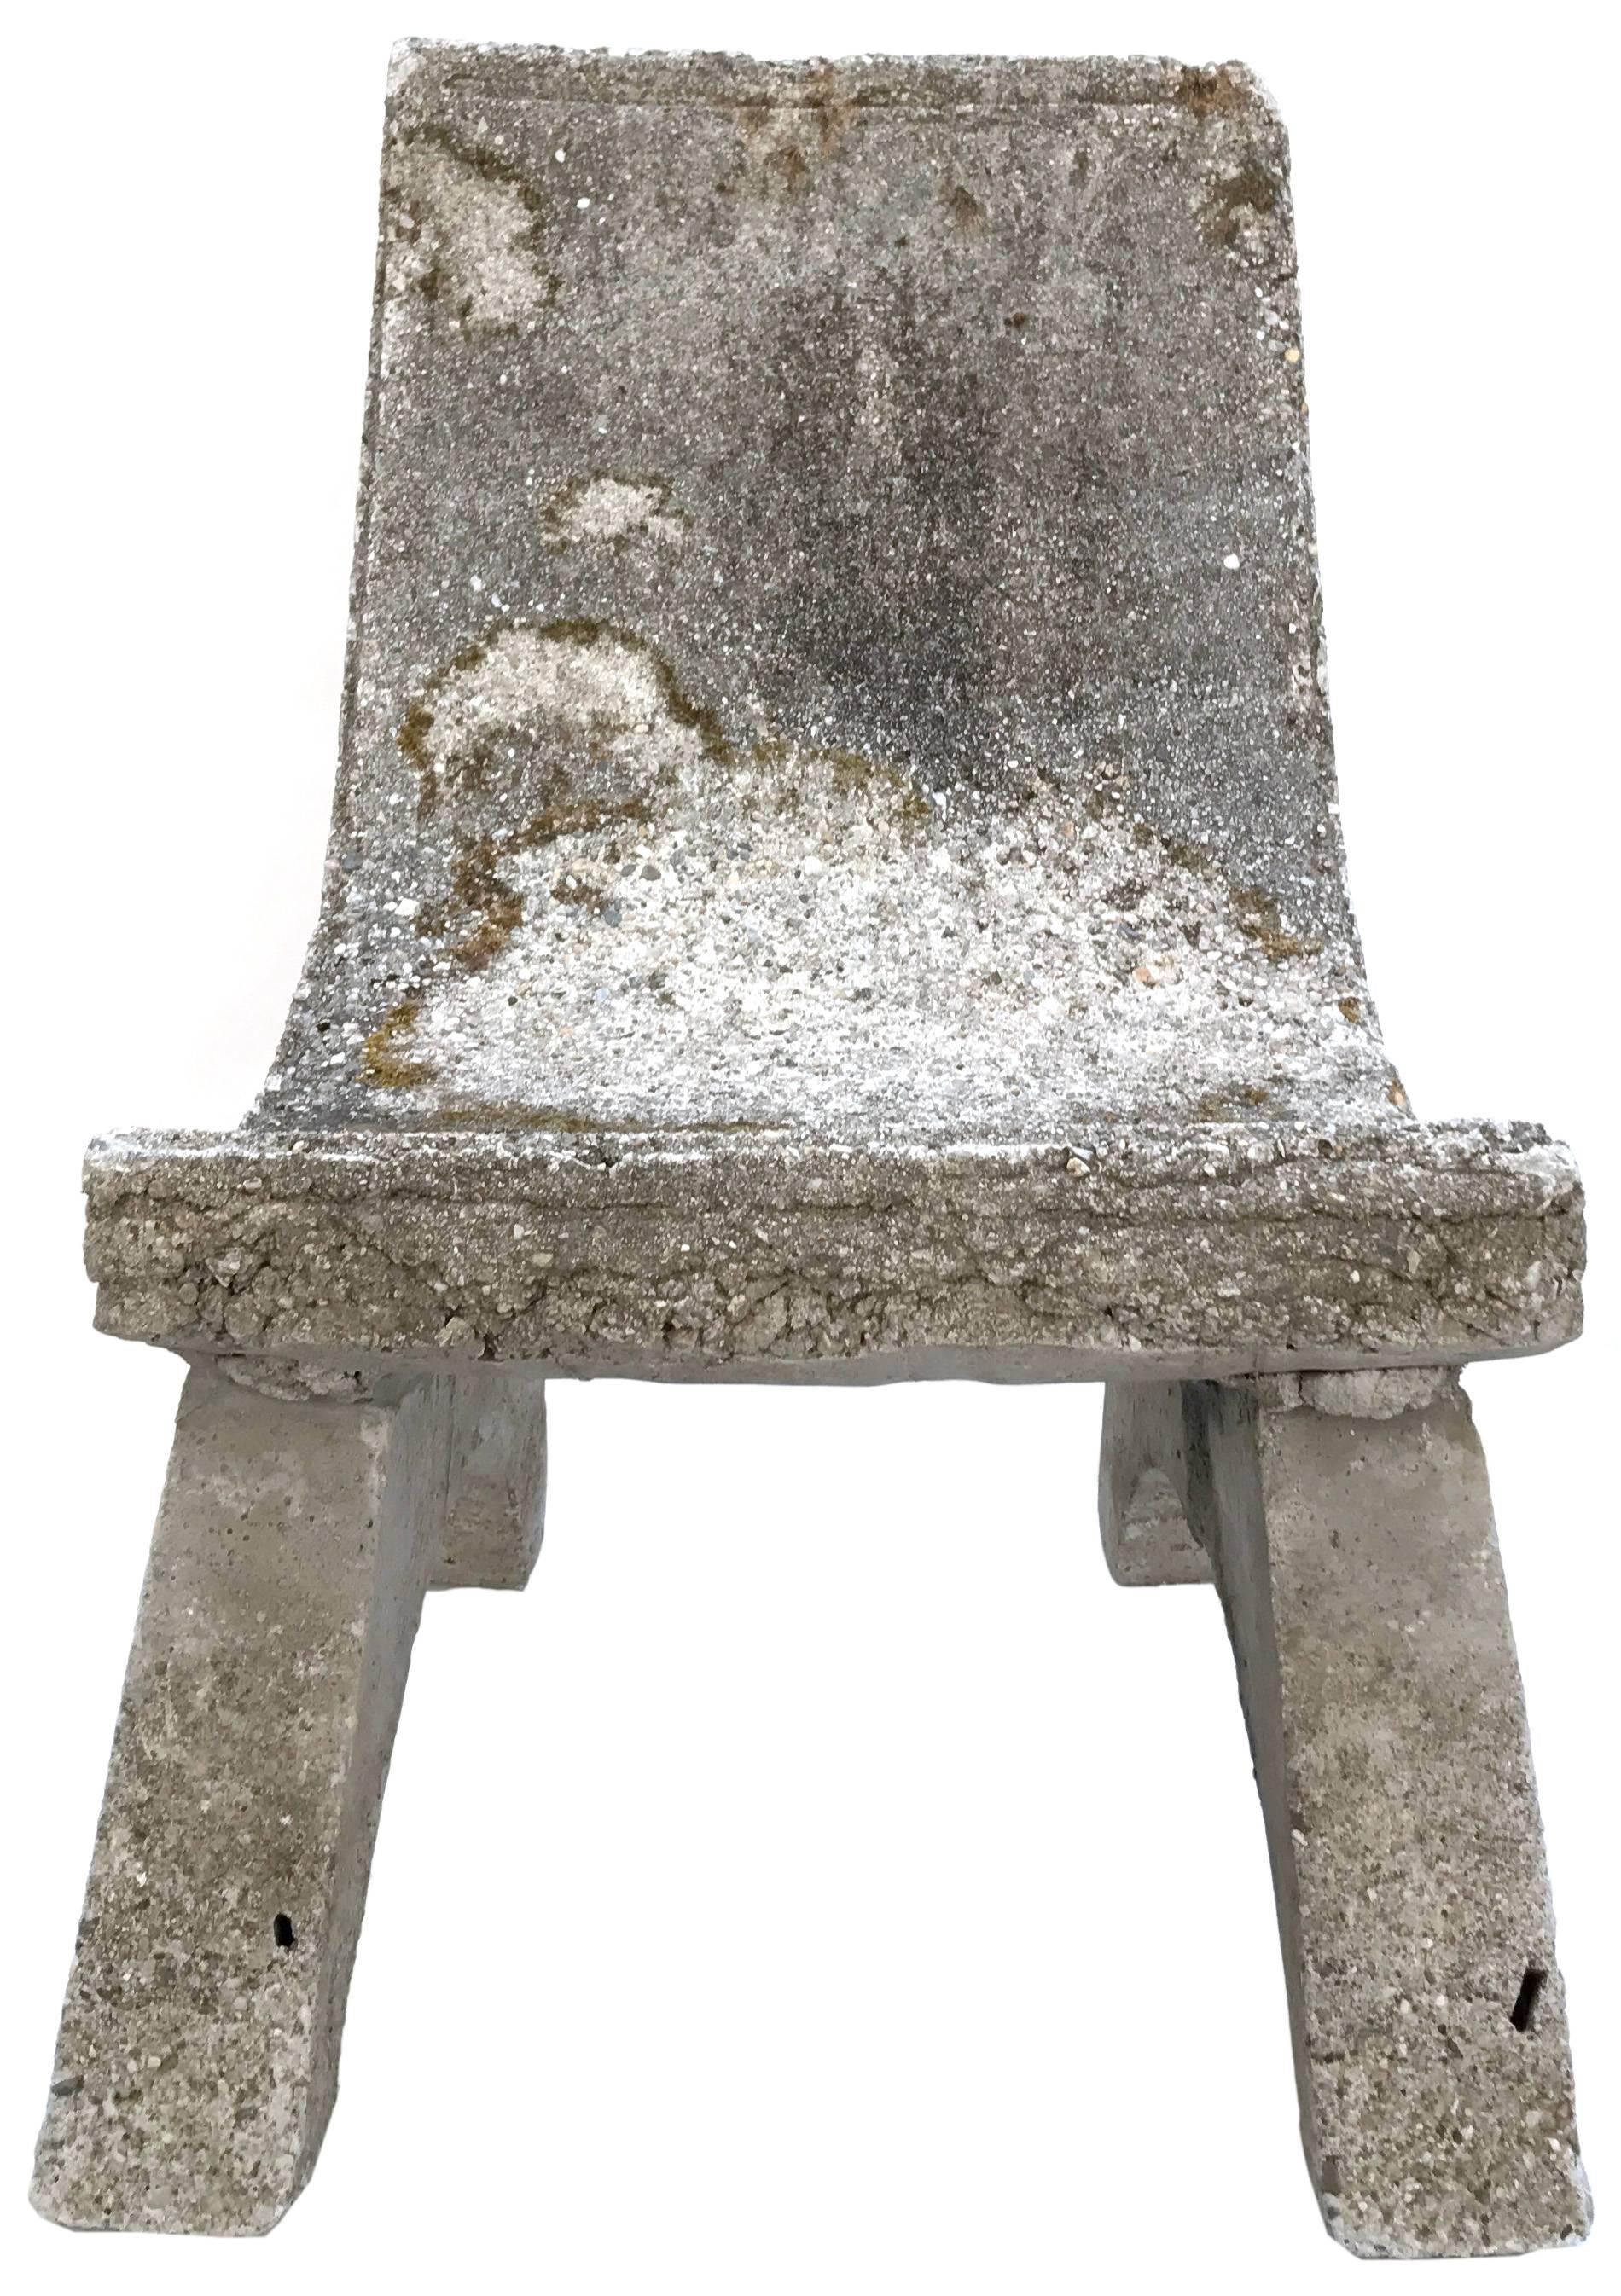 American Cast Concrete Garden Chair